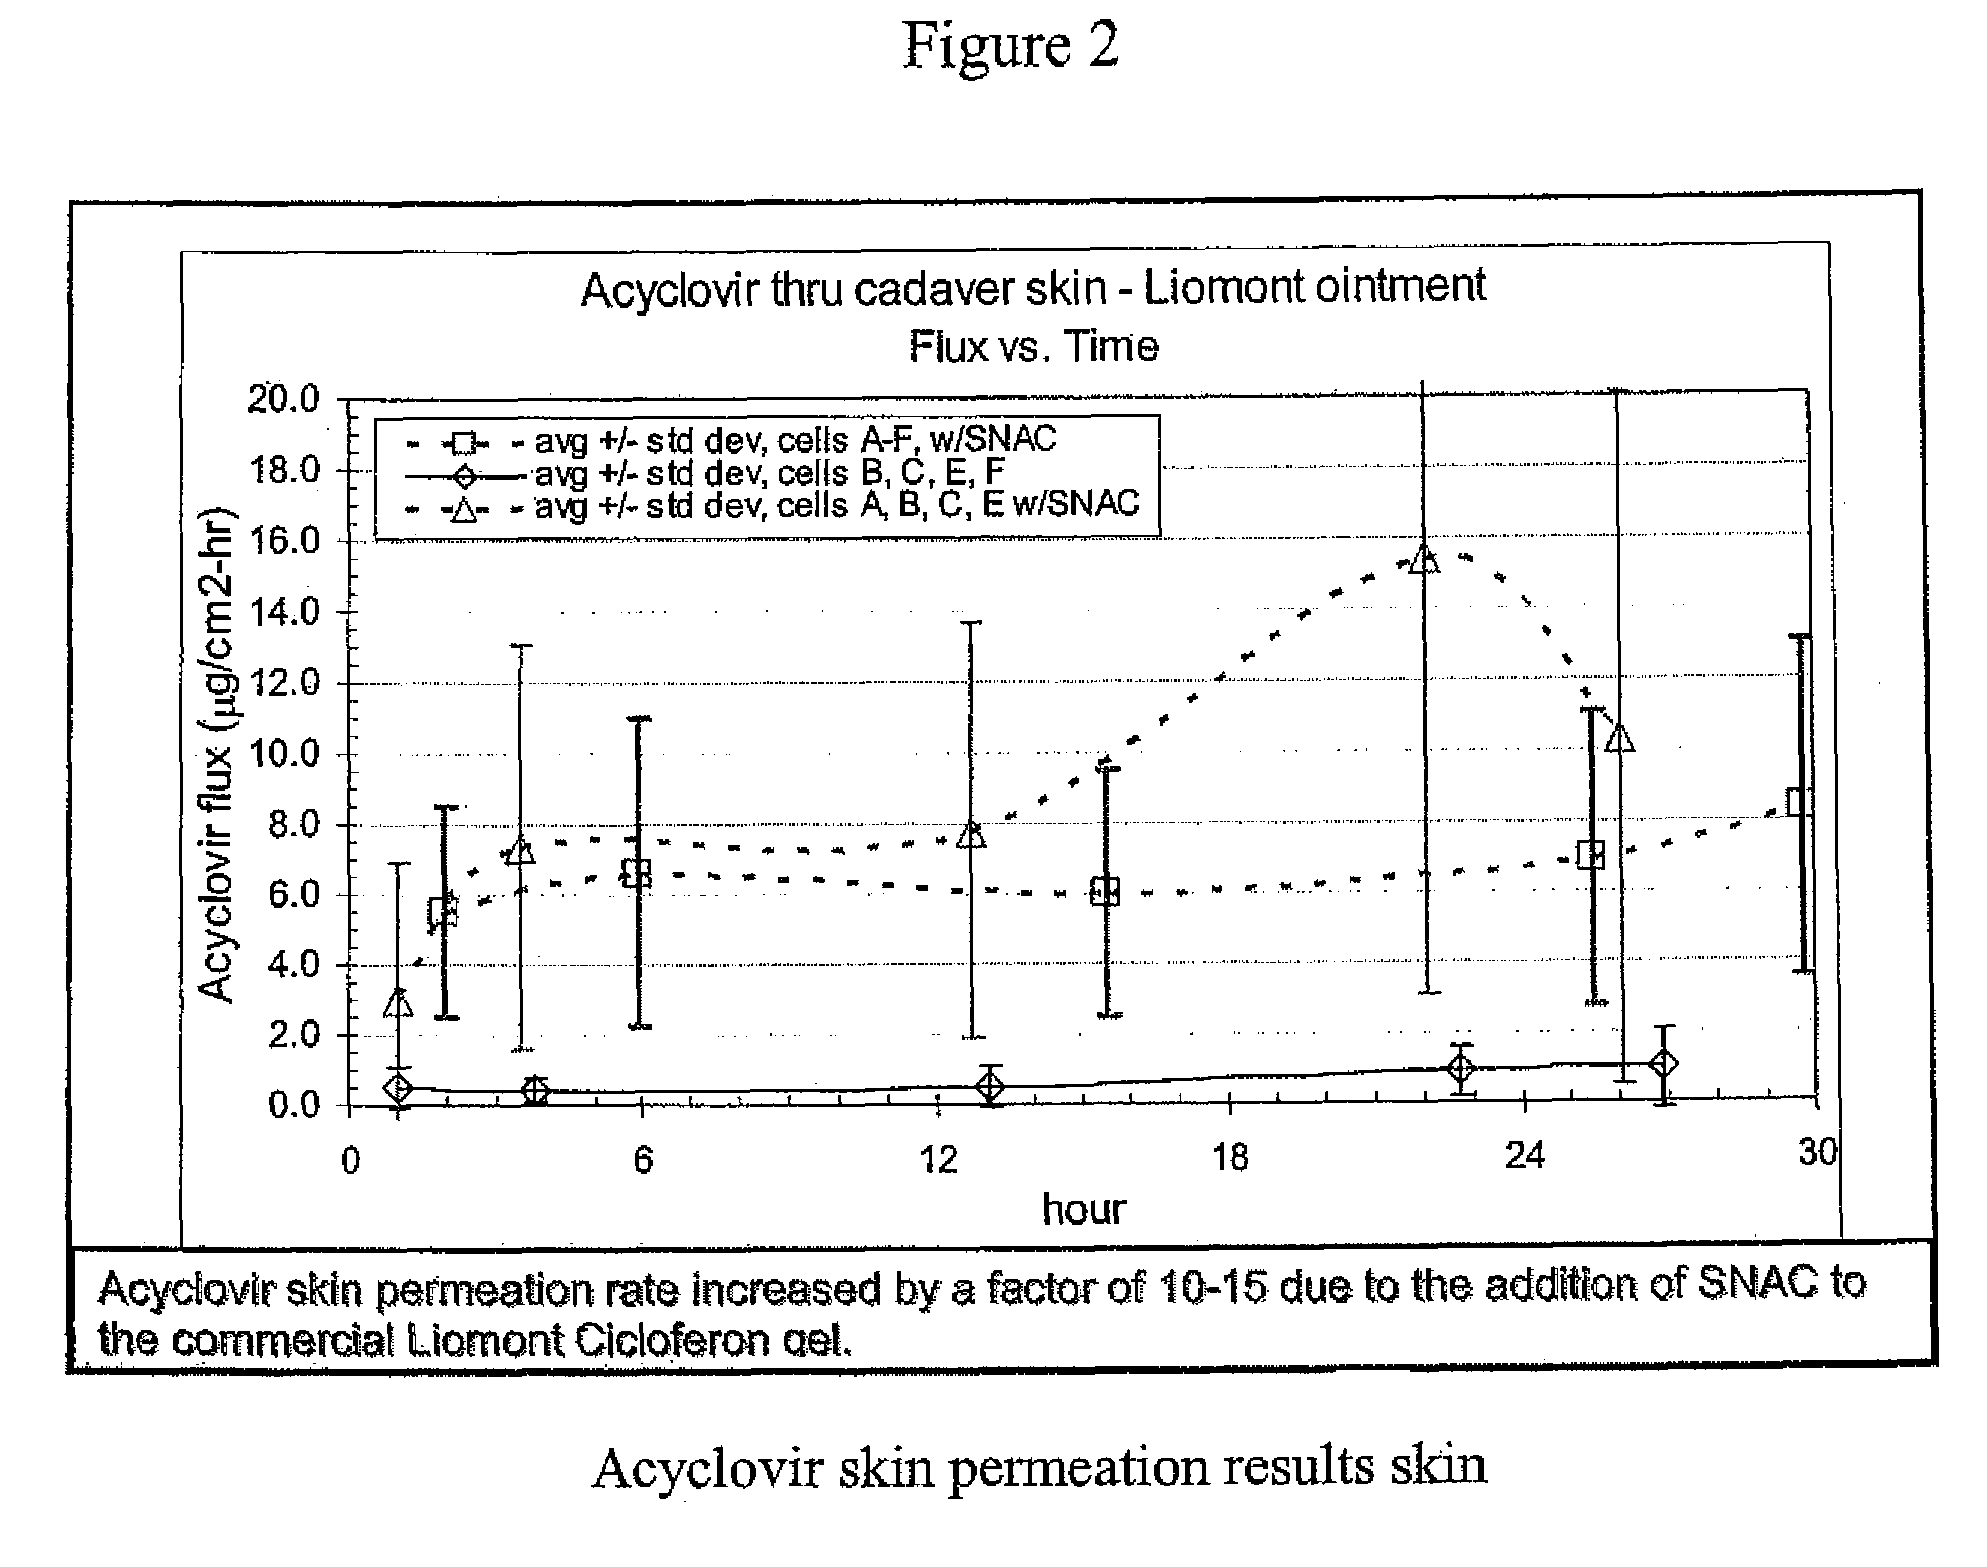 Topical administration of acyclovir